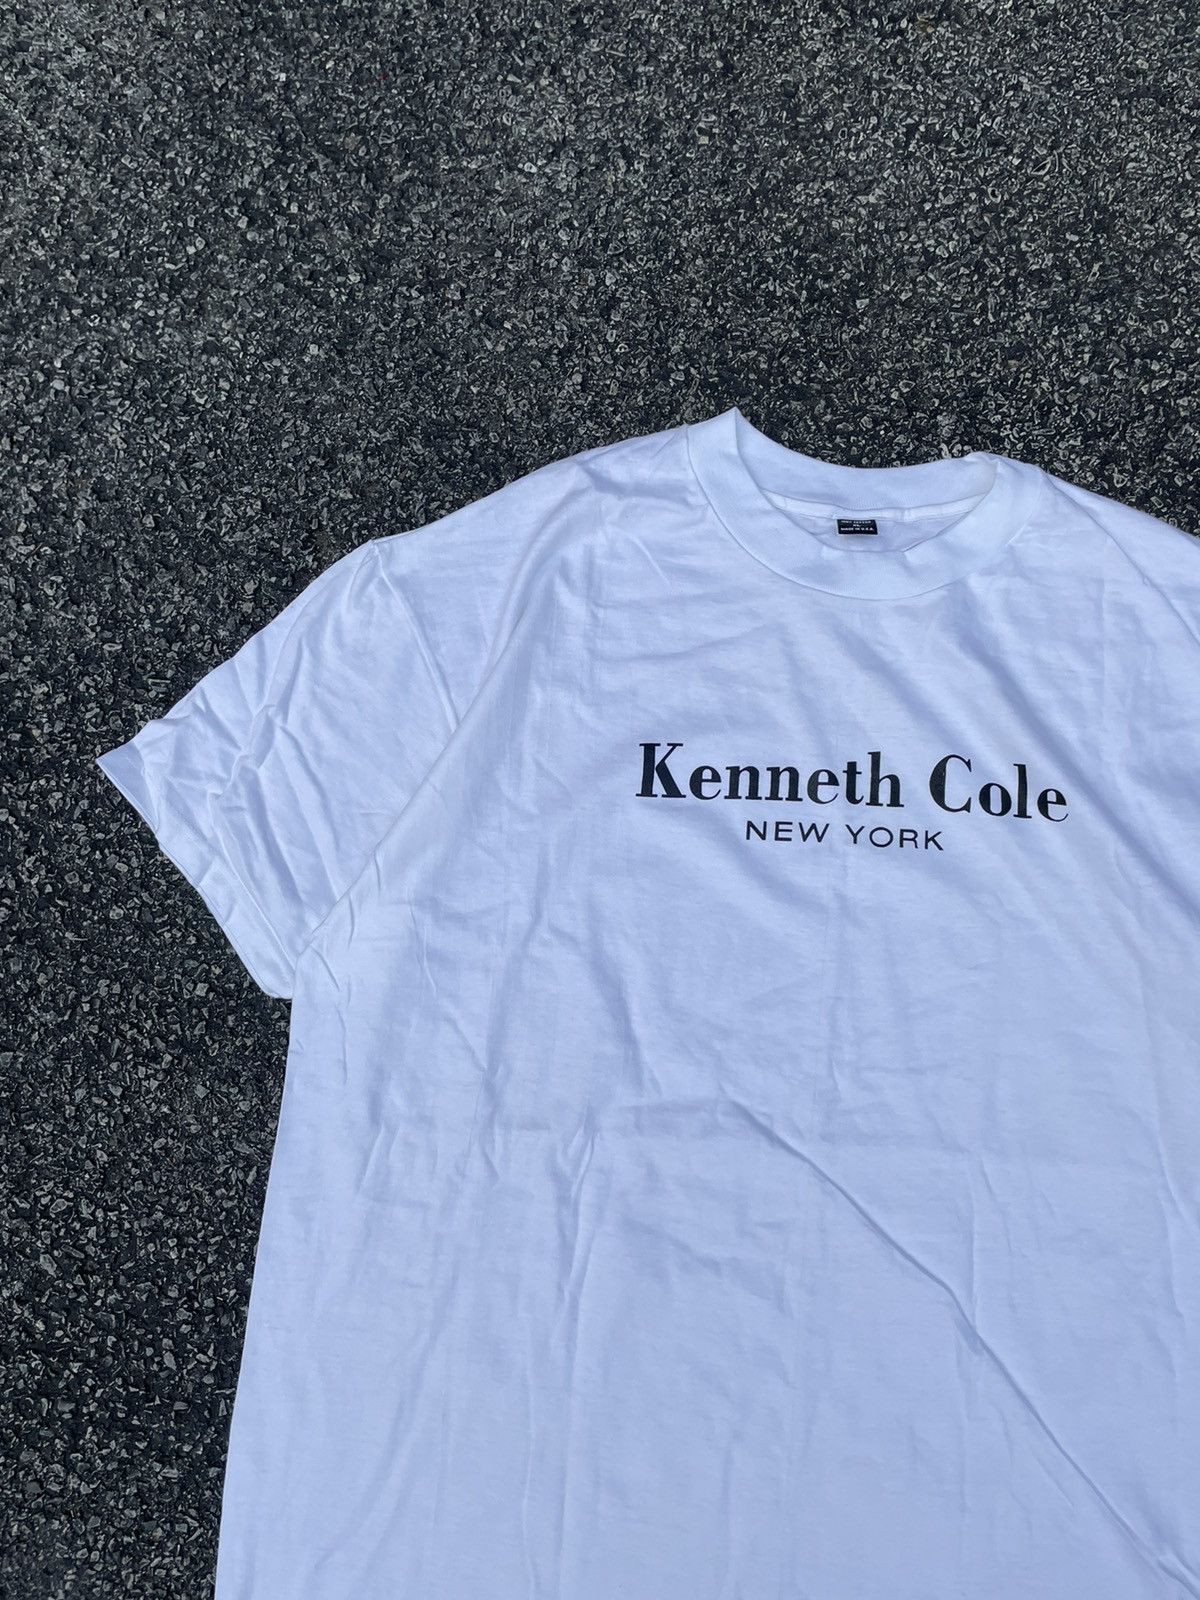 Vintage Vintage Kenneth Cole New York t shirt Size US XL / EU 56 / 4 - 2 Preview